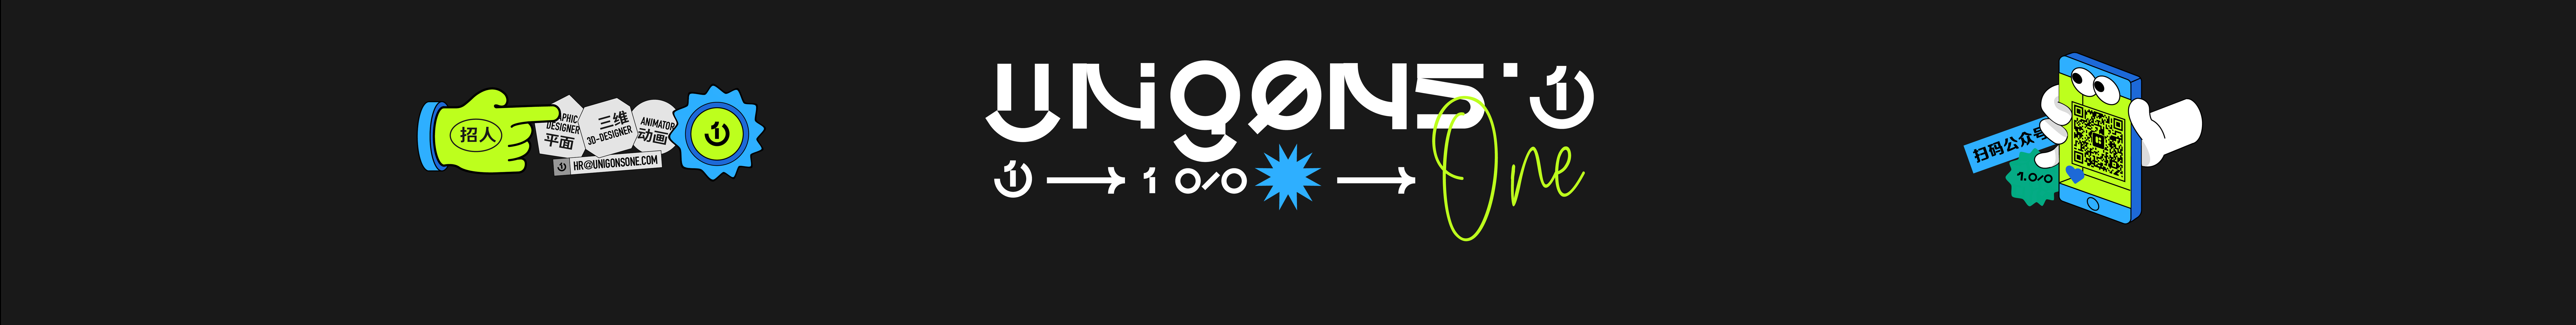 Unigons One's profile banner